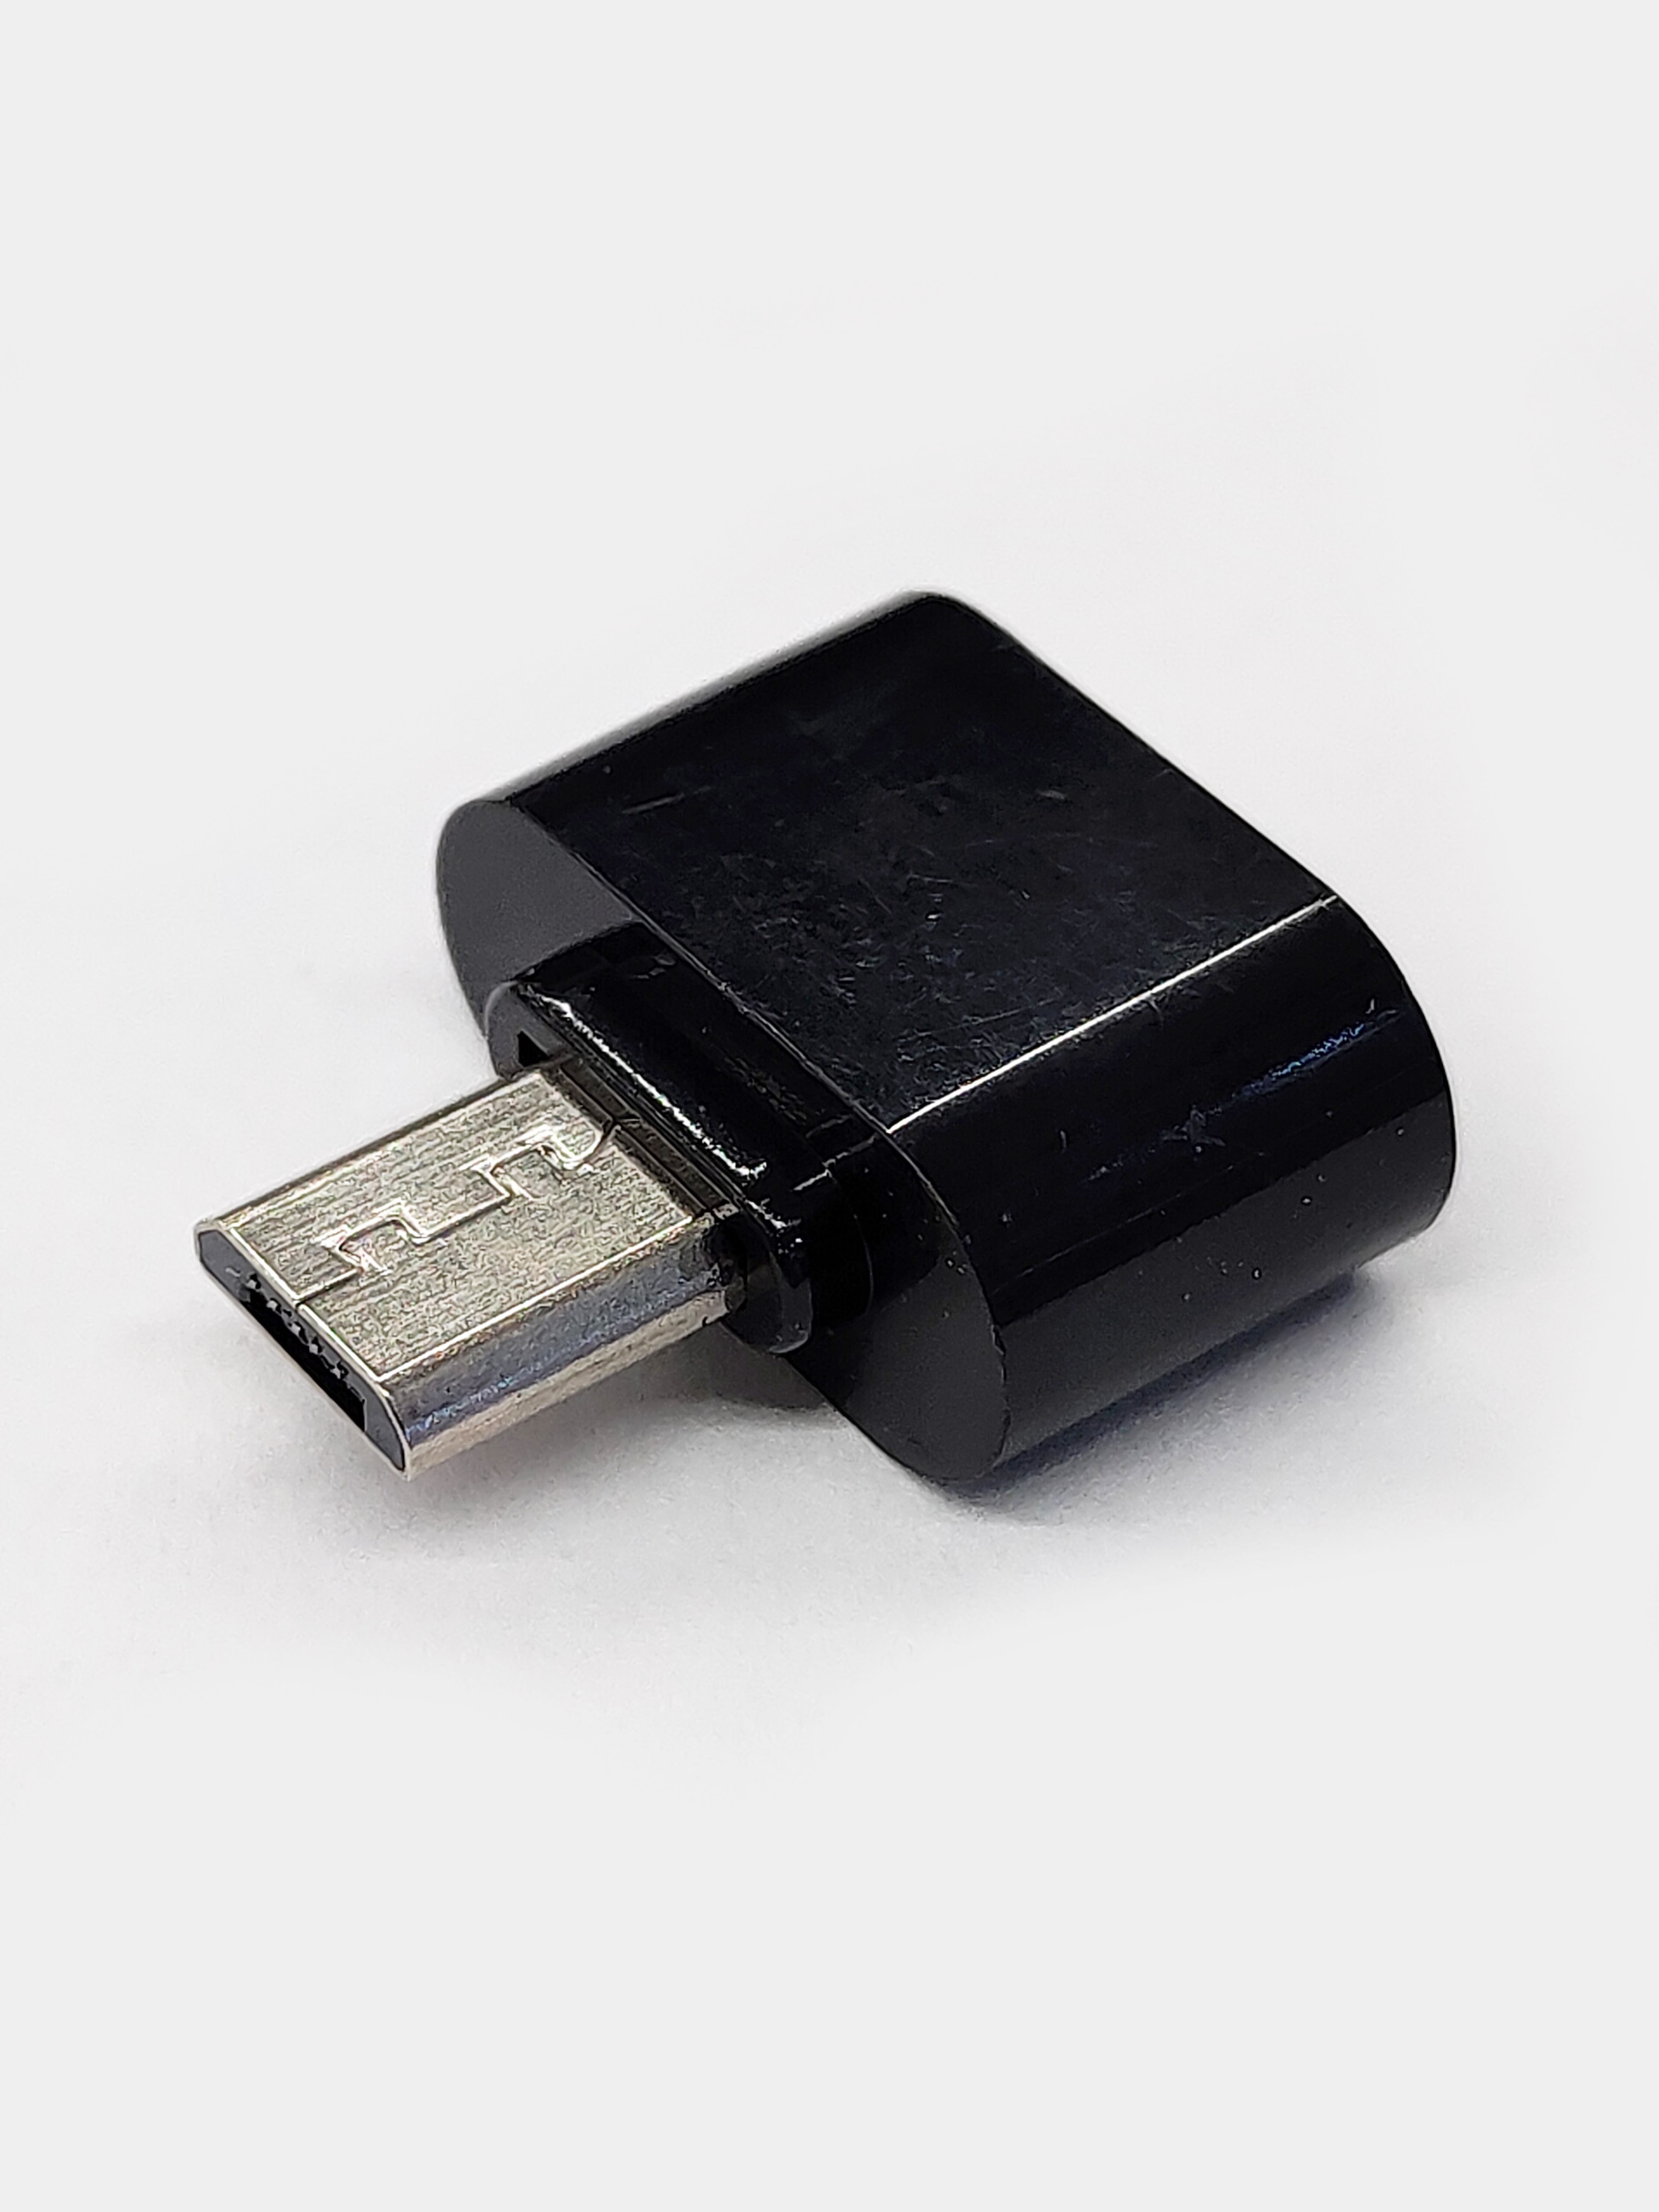 Микро USB OTG кабель адаптер для Samsung HTC планшет Sony андроид планшет пк MP3 / MP4 смартфон